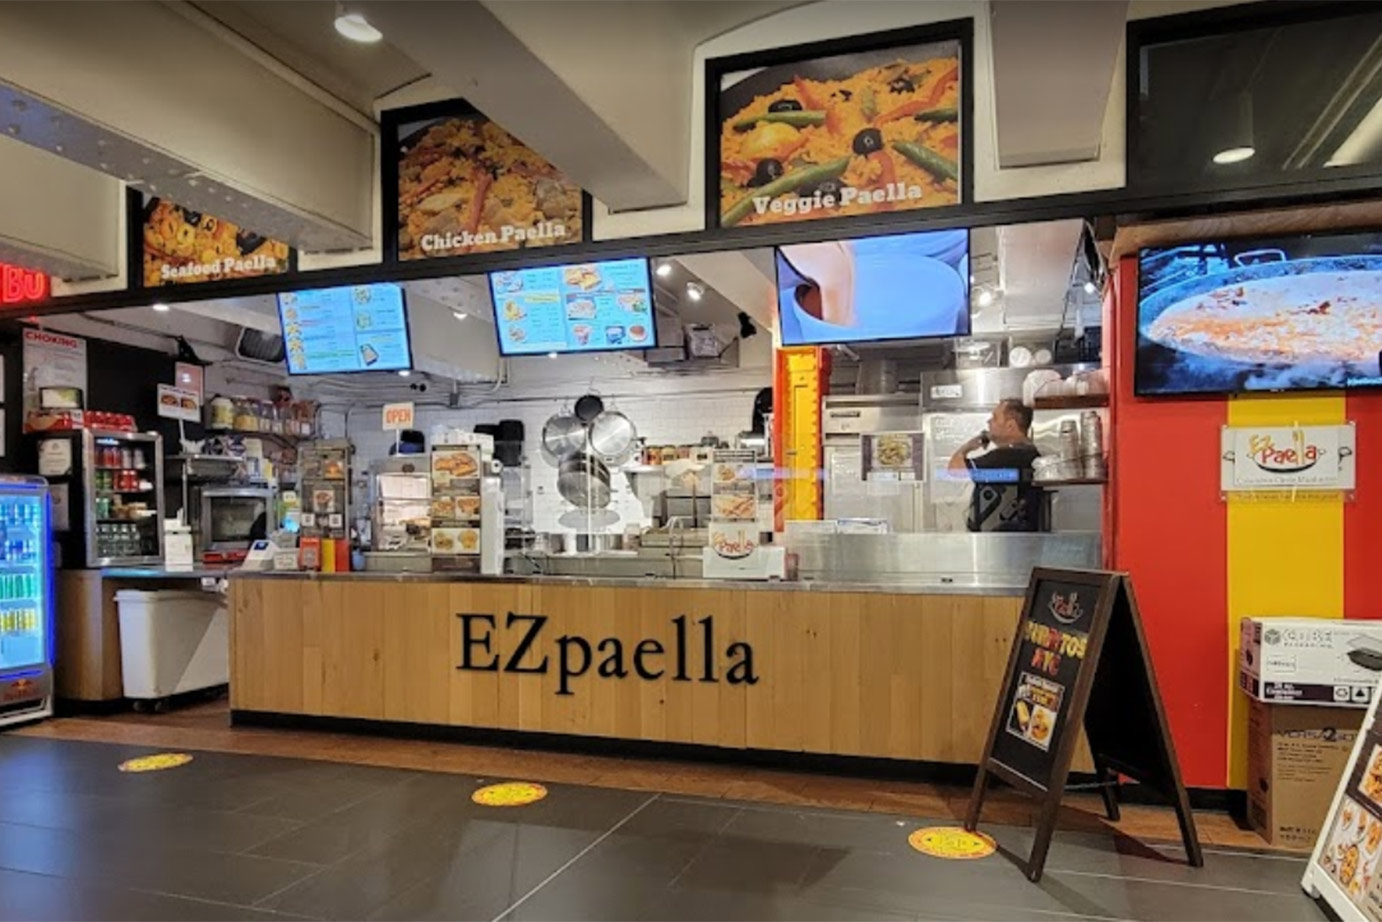 EZ Paella Express